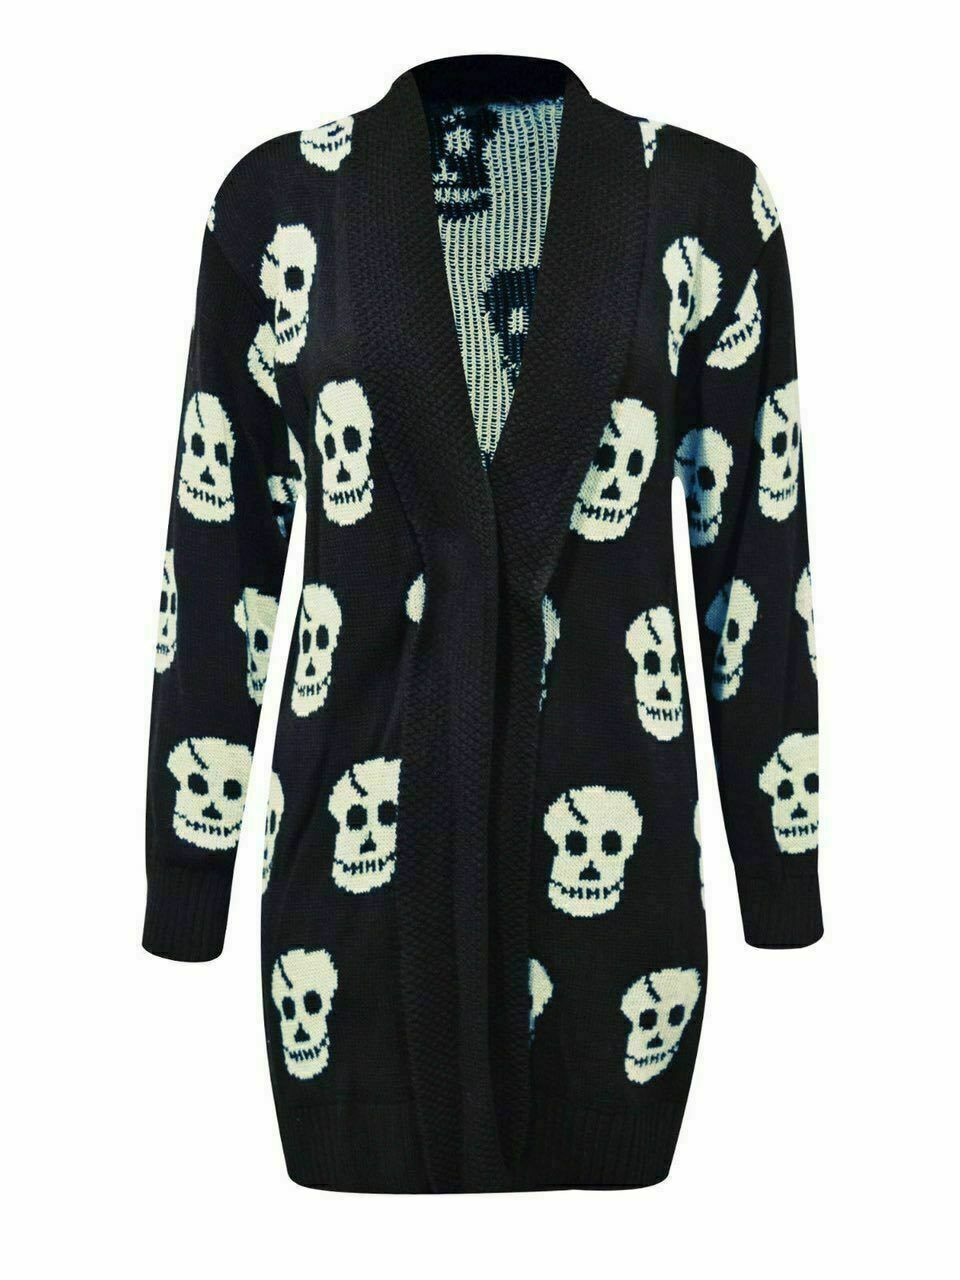 Ladies women's Knitted Skull Cardigan Jumper Cardigan Winter Halloween Lot - Comfyfit ltd